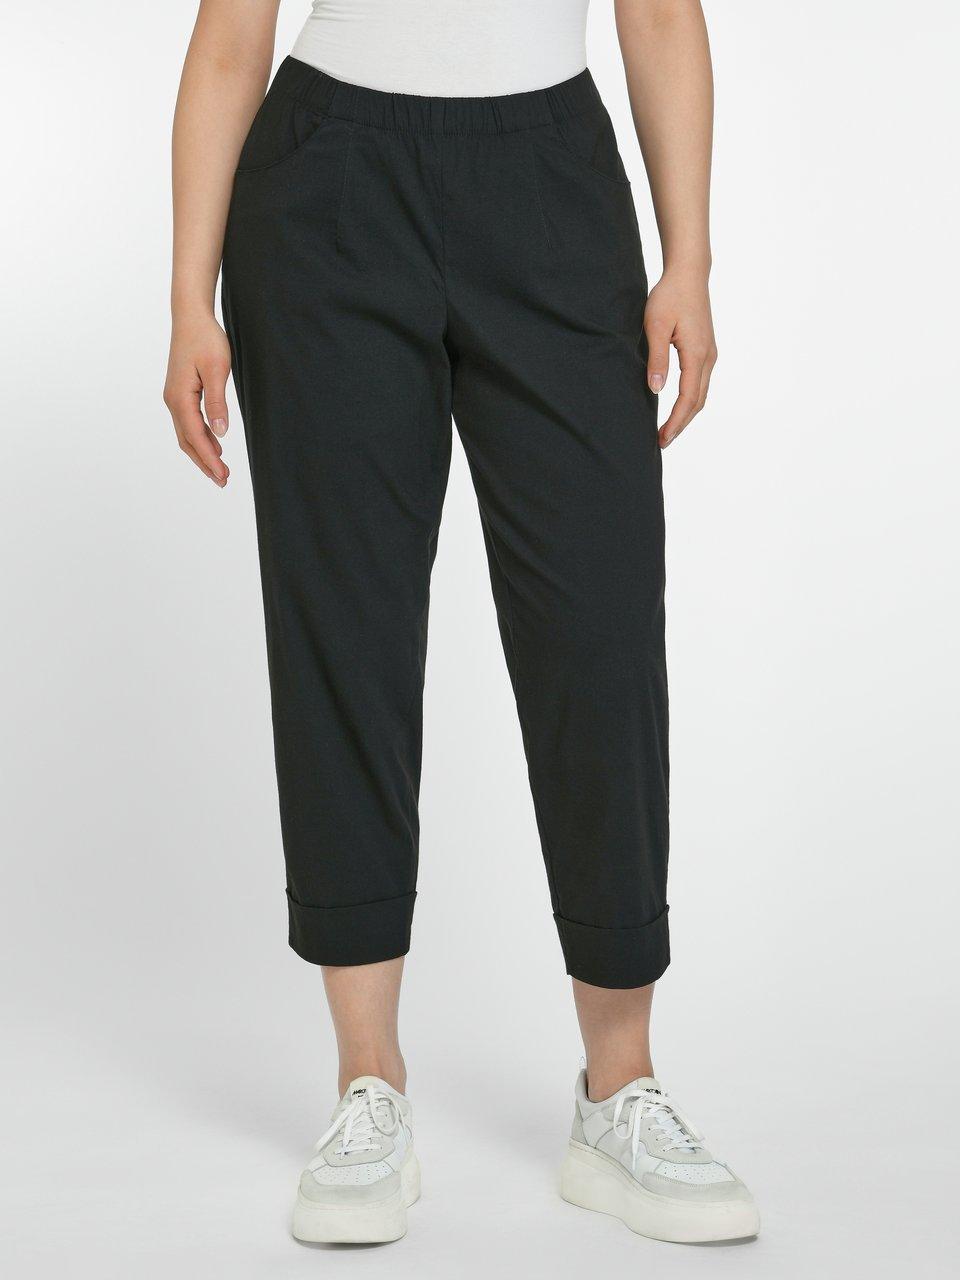 KjBrand - 7/8-length - Susie trousers fit in black